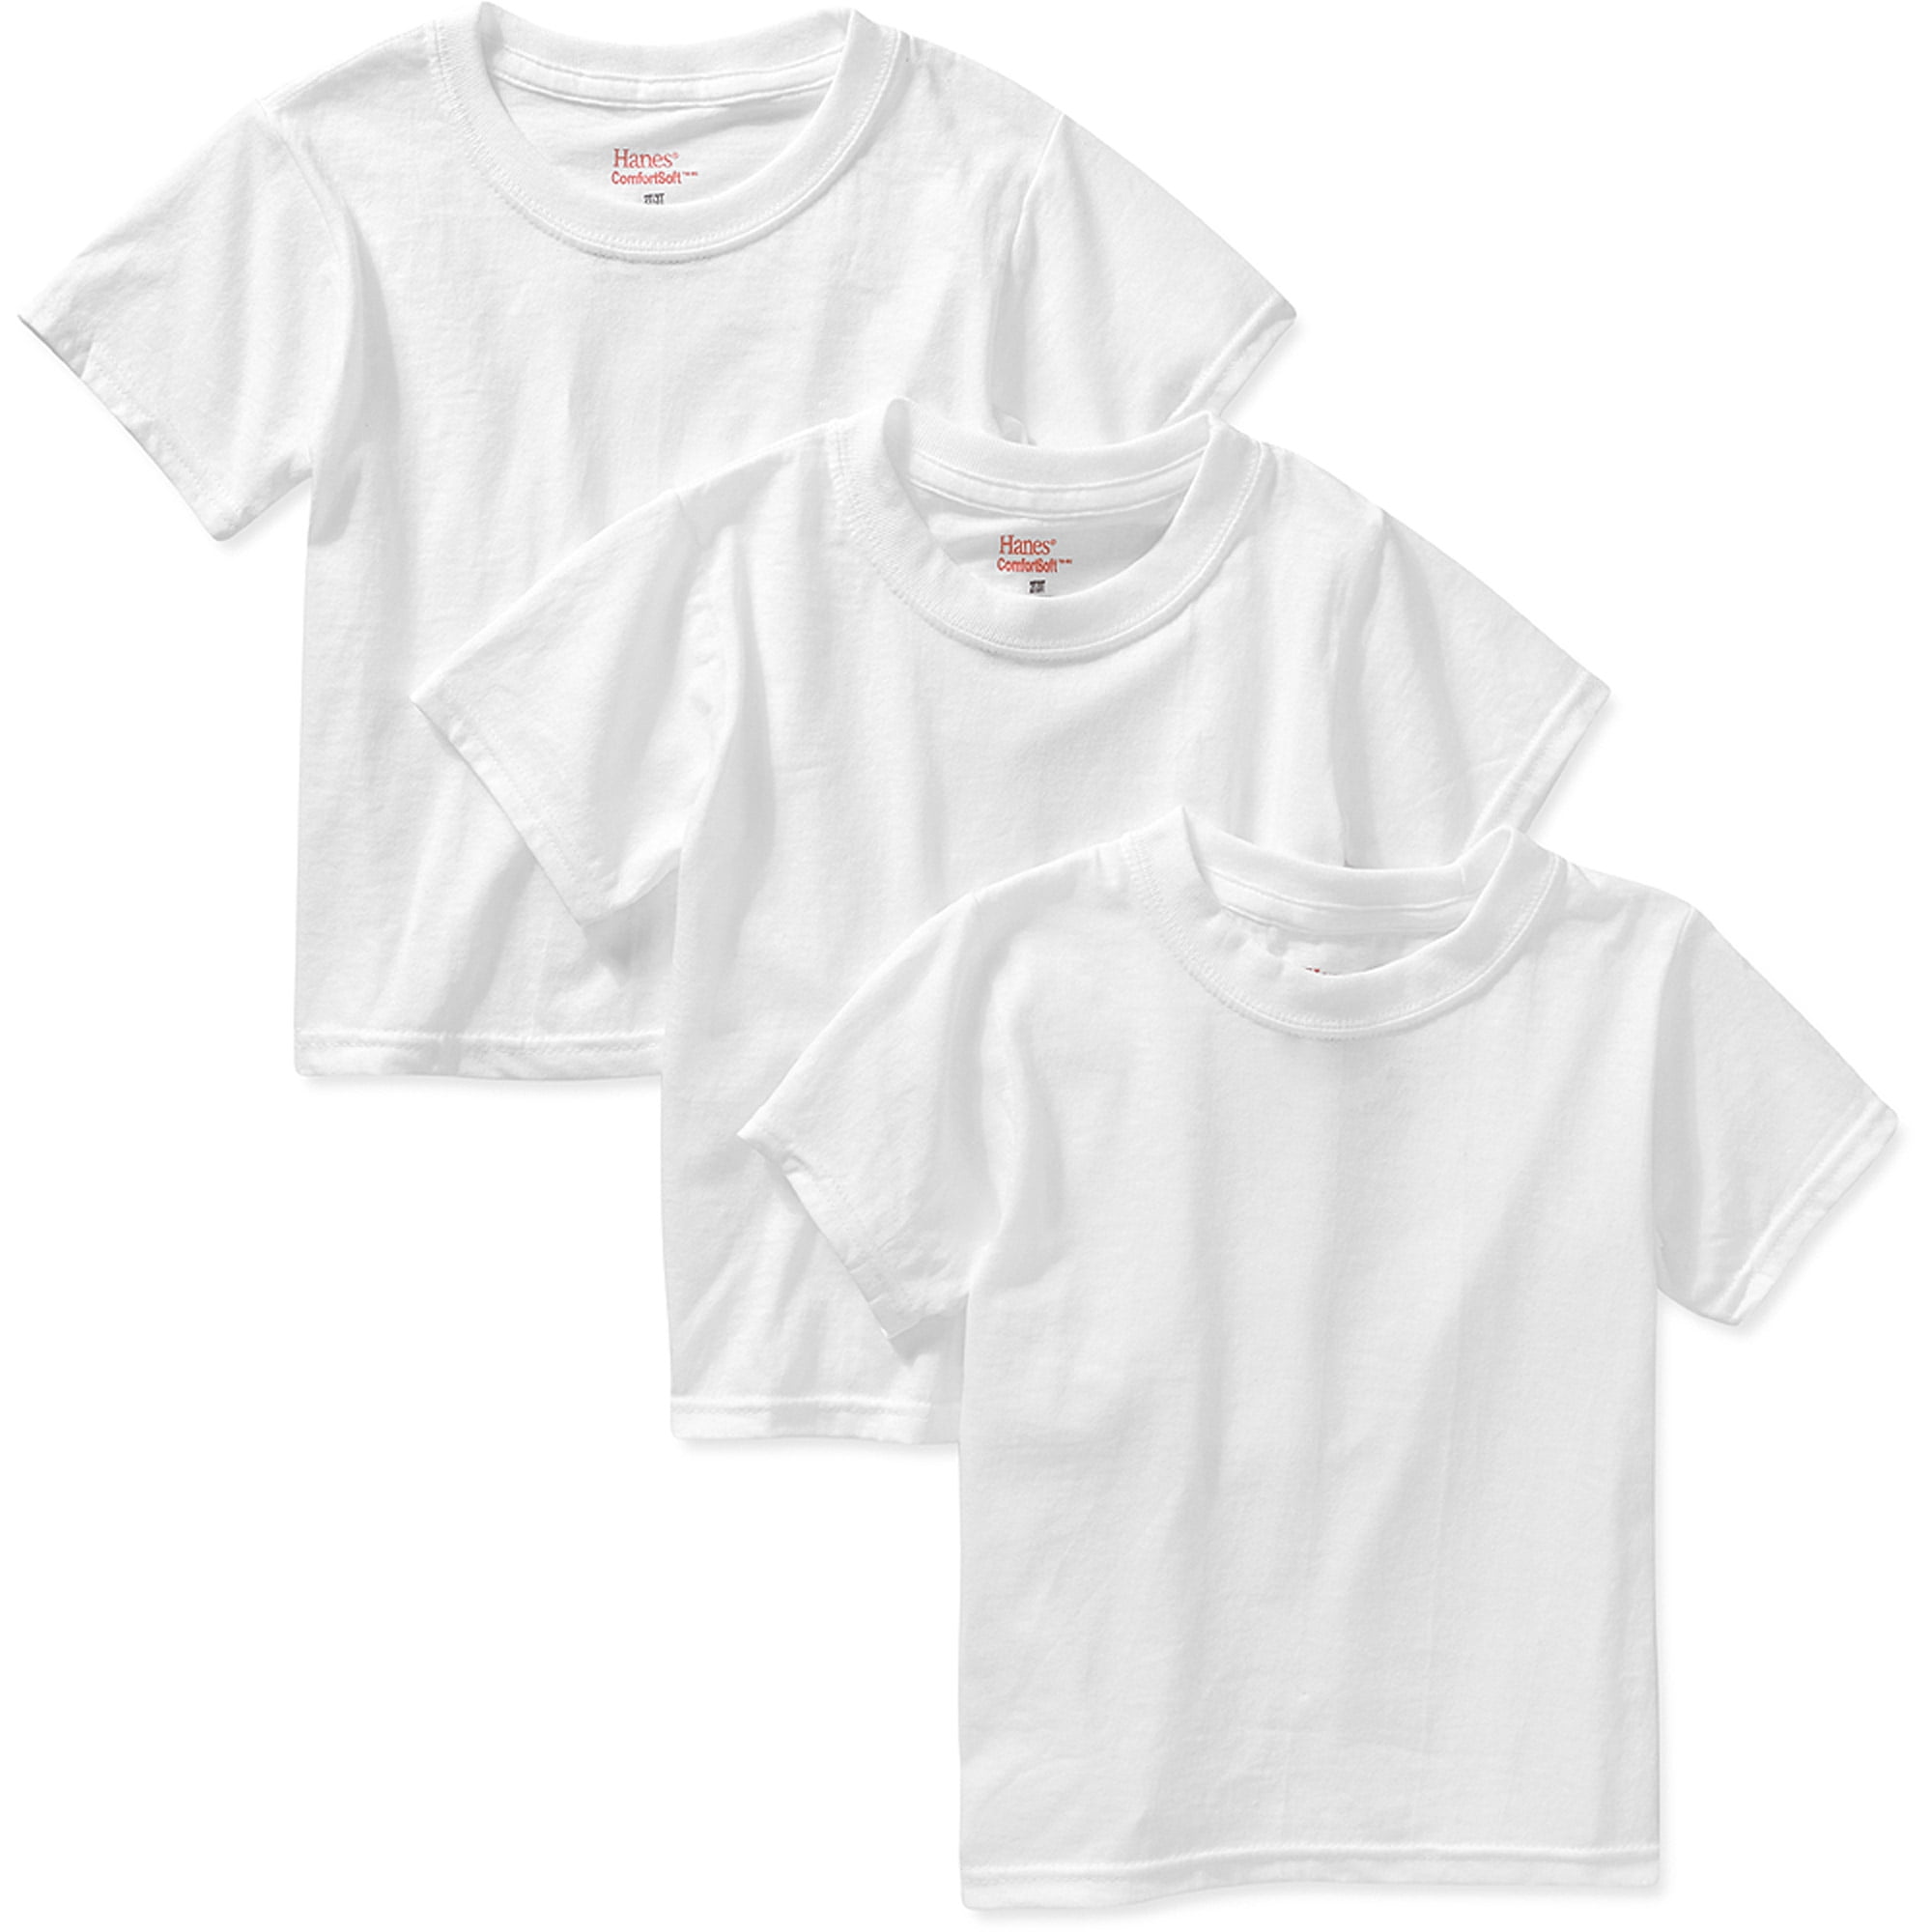 Boys Girls Kids T-Shirts Plain Soft Cotton Round Neck T-Shirt PE School Uniform 